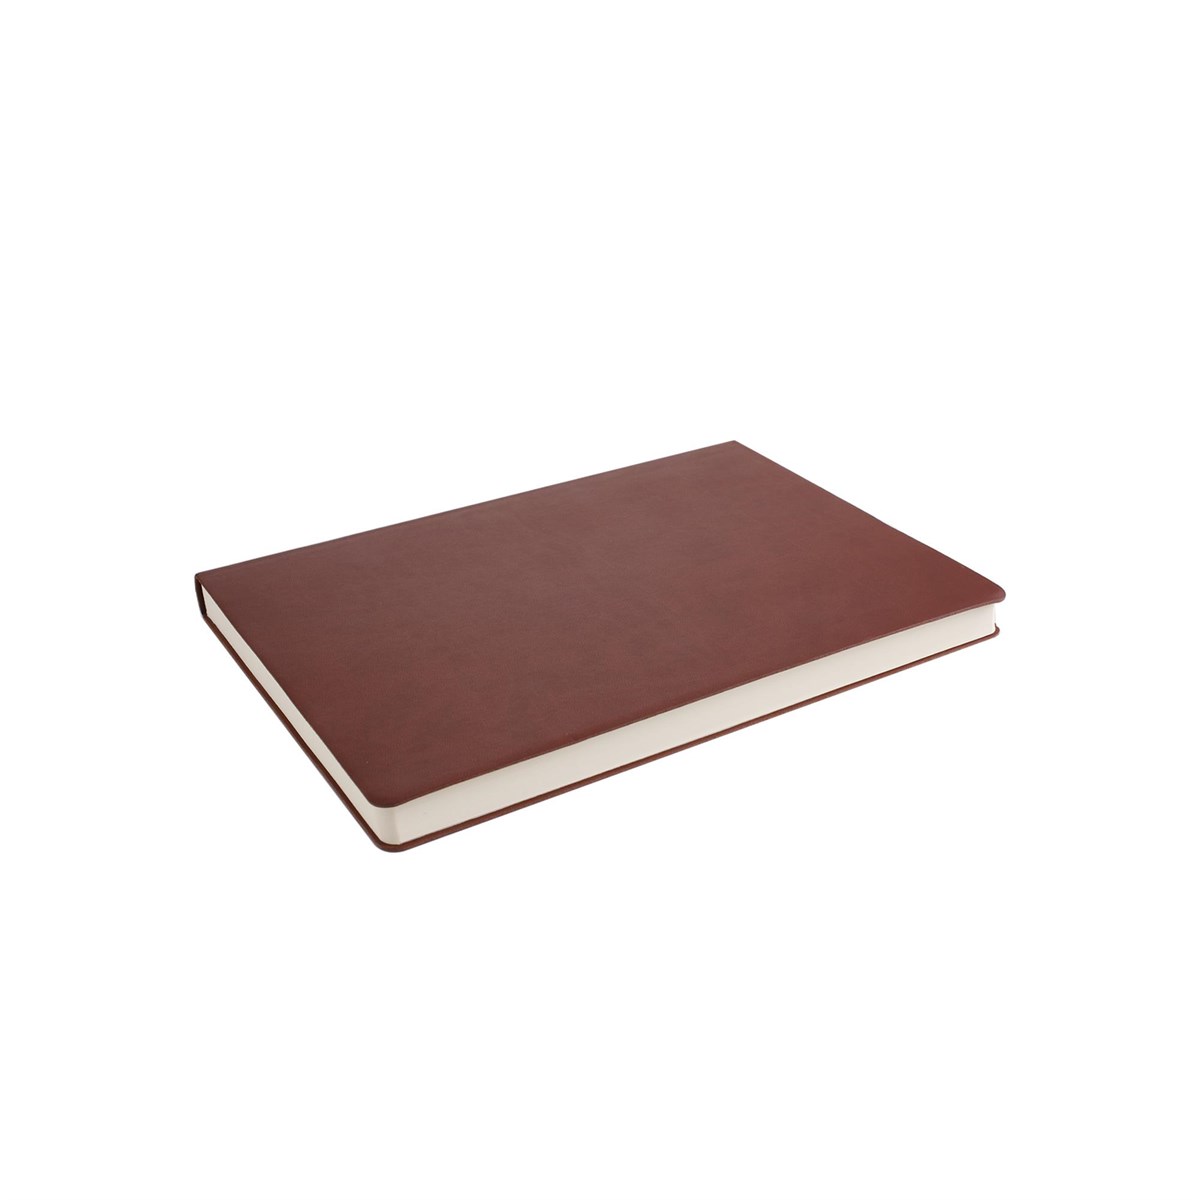 Karatis B5 Size Tomoe River Paper 52 gsm Notebook